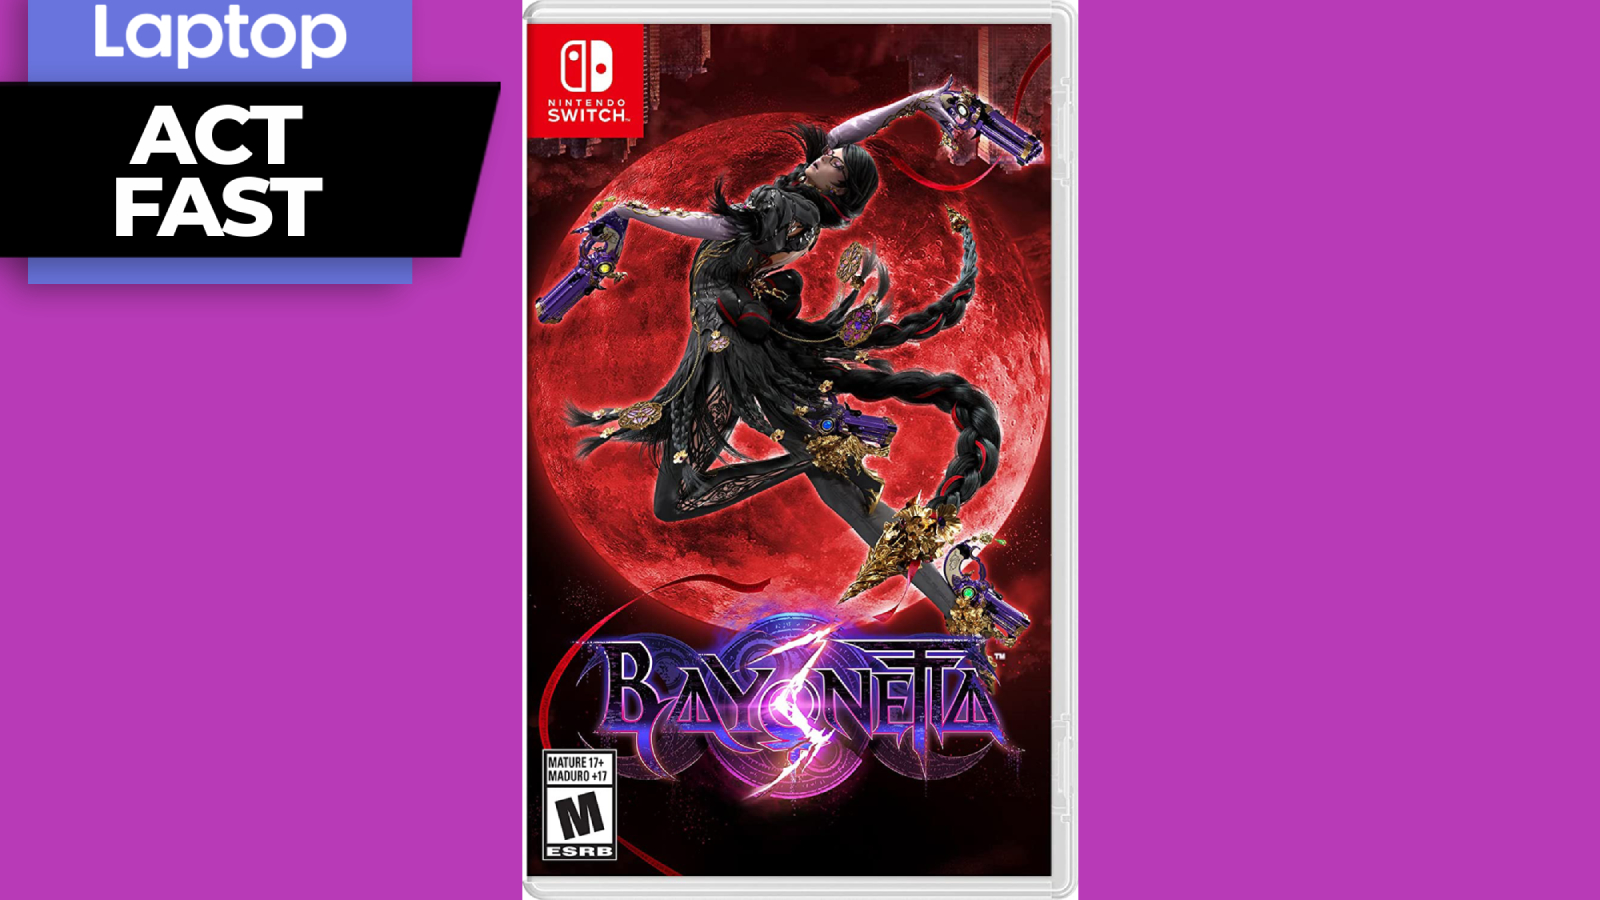 Save 25% on Bayonetta 3 for Nintendo Switch